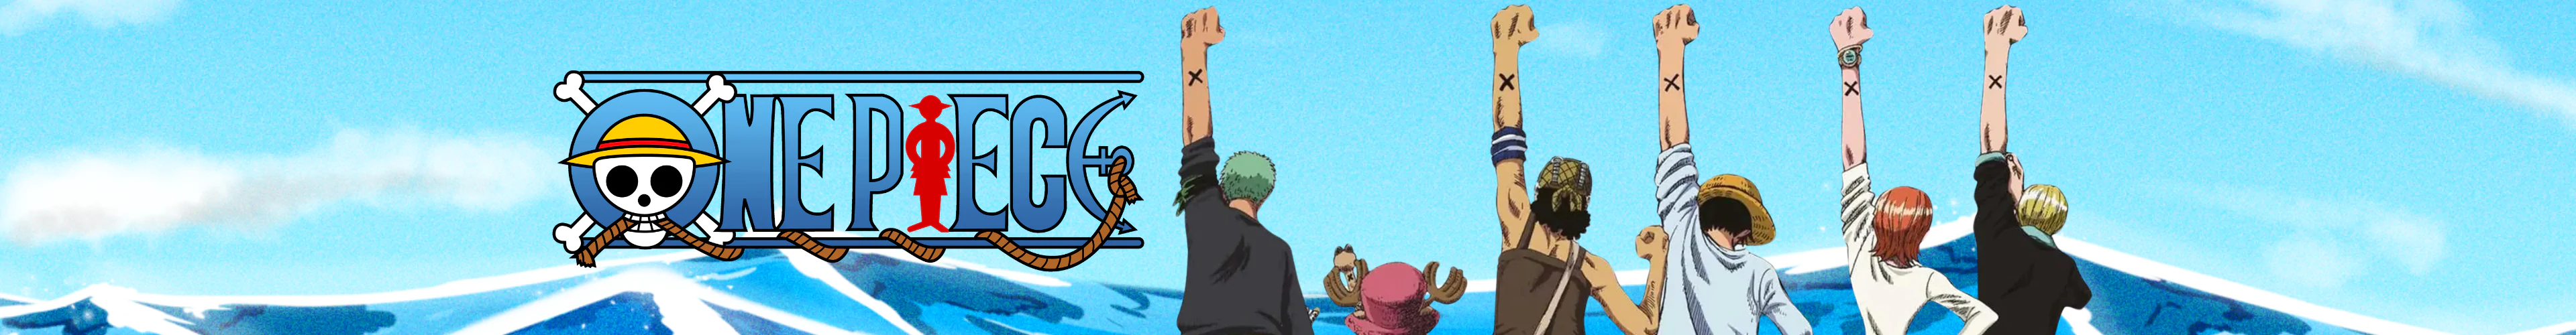 One Piece figures banner